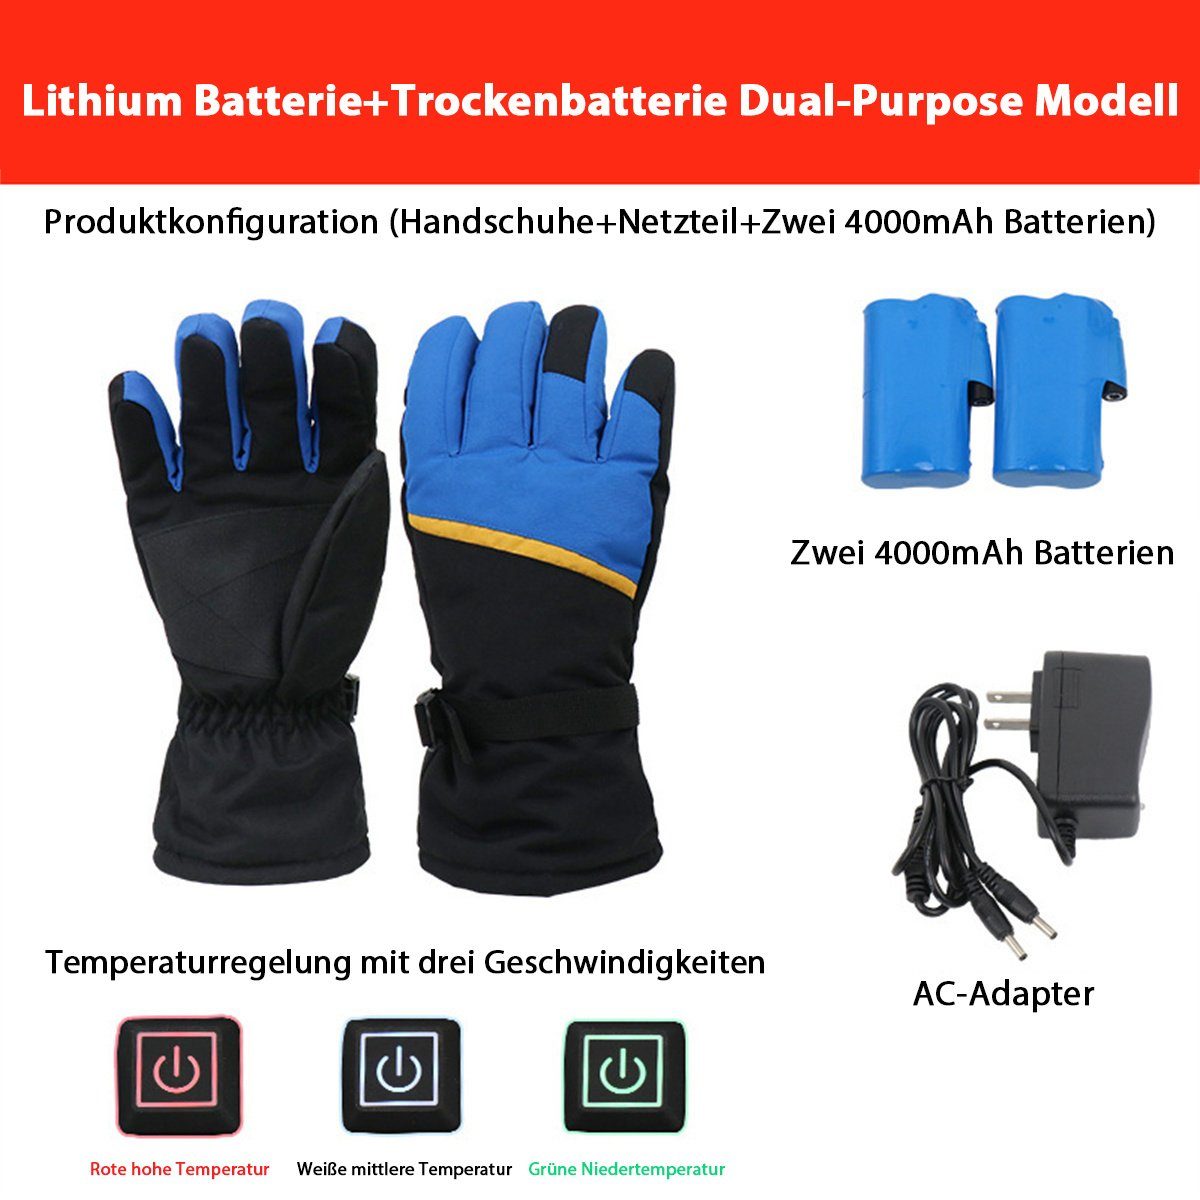 carefully Winterradfahren Blau warme Reithandschuhe selected kältebeständige Touchscreen-Heizhandschuhe und